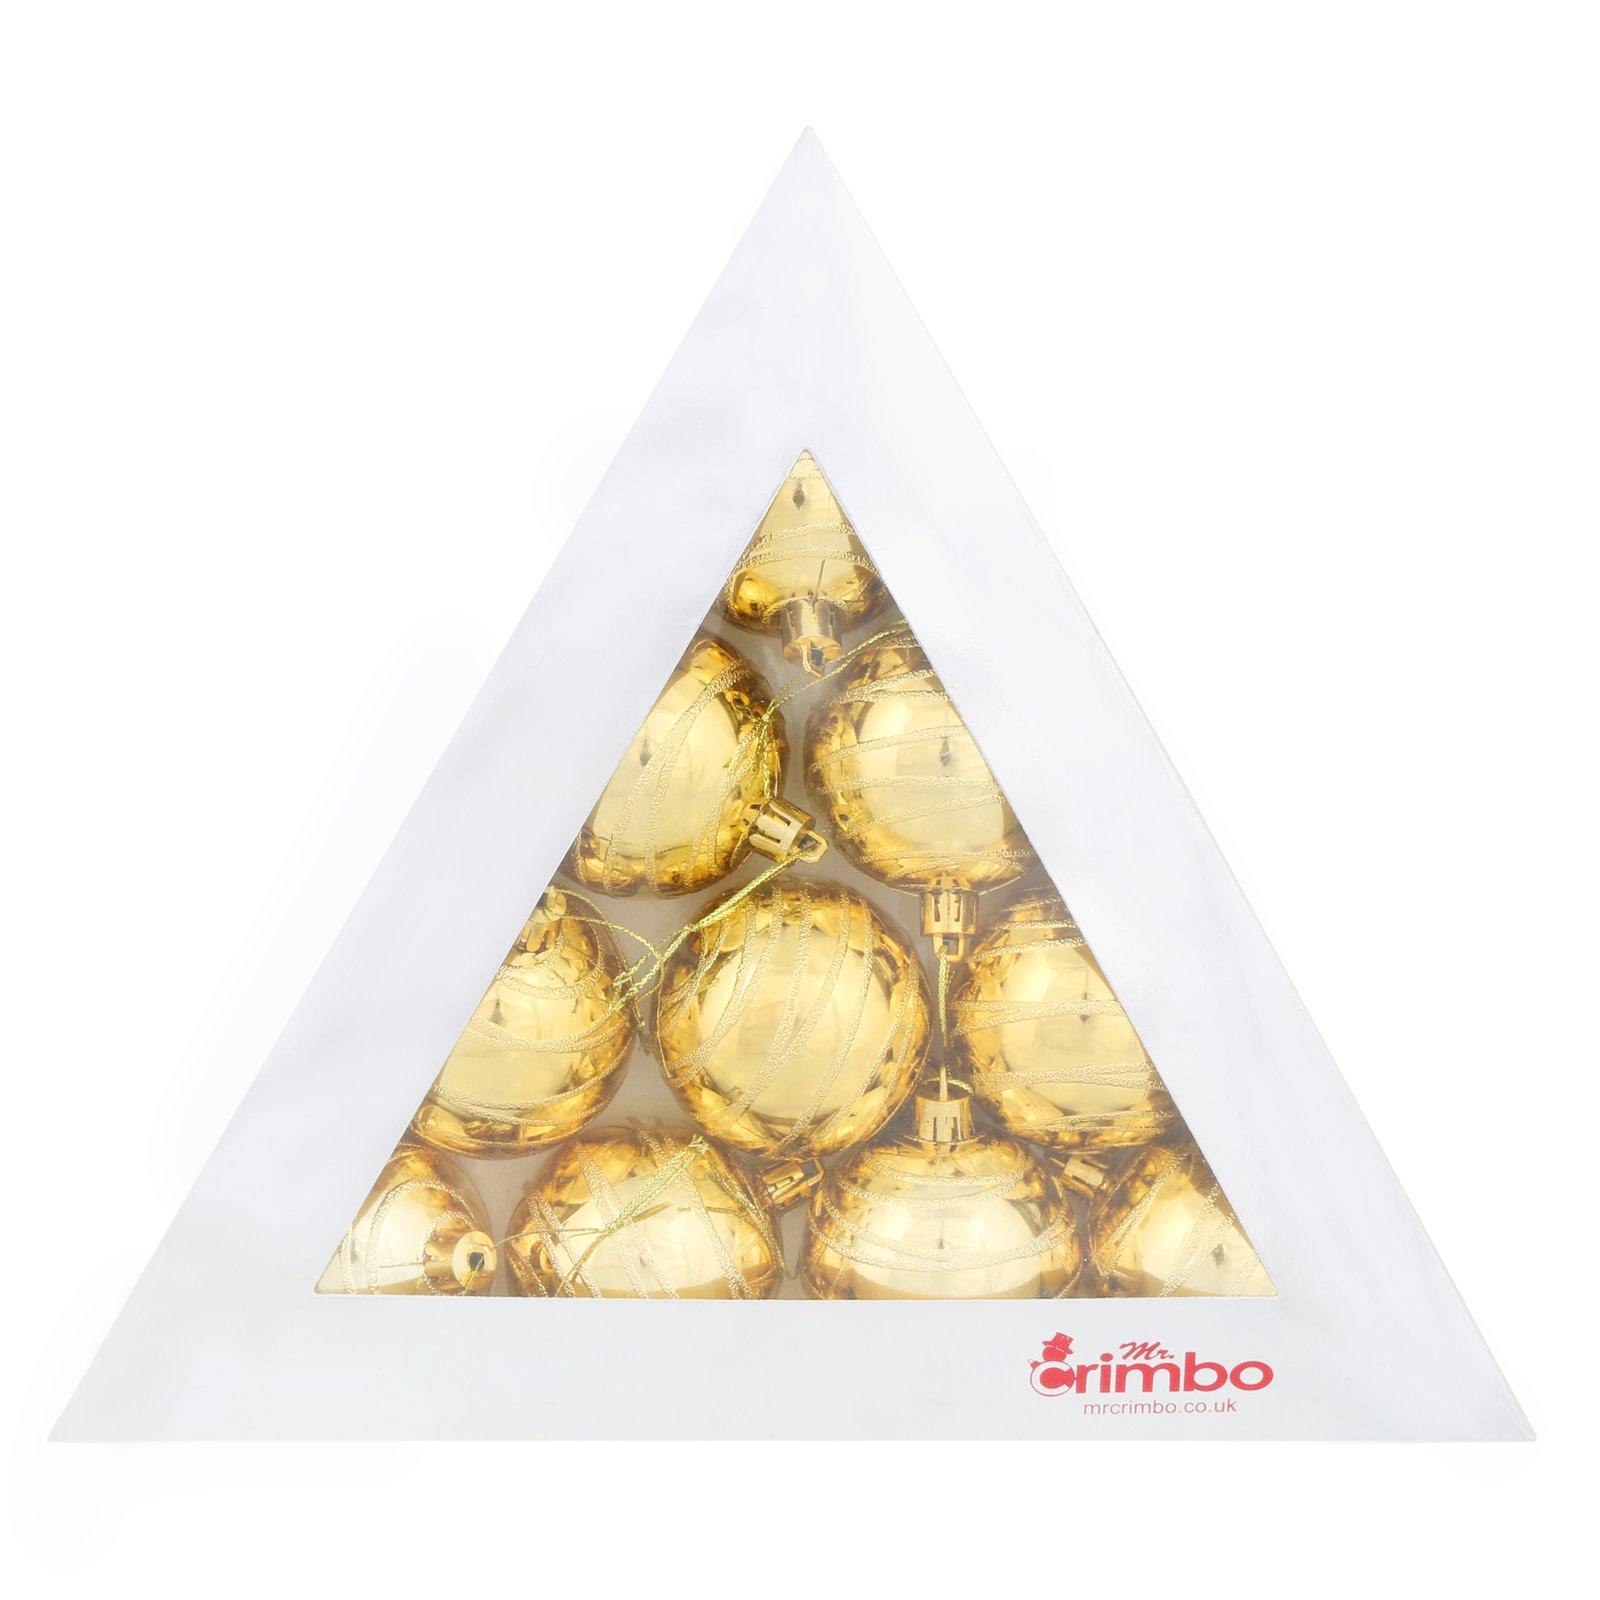 Mr Crimbo 10 x 6cm Mirrored Swirl Christmas Tree Baubles - MrCrimbo.co.uk -XS5703 - Gold -Baubles